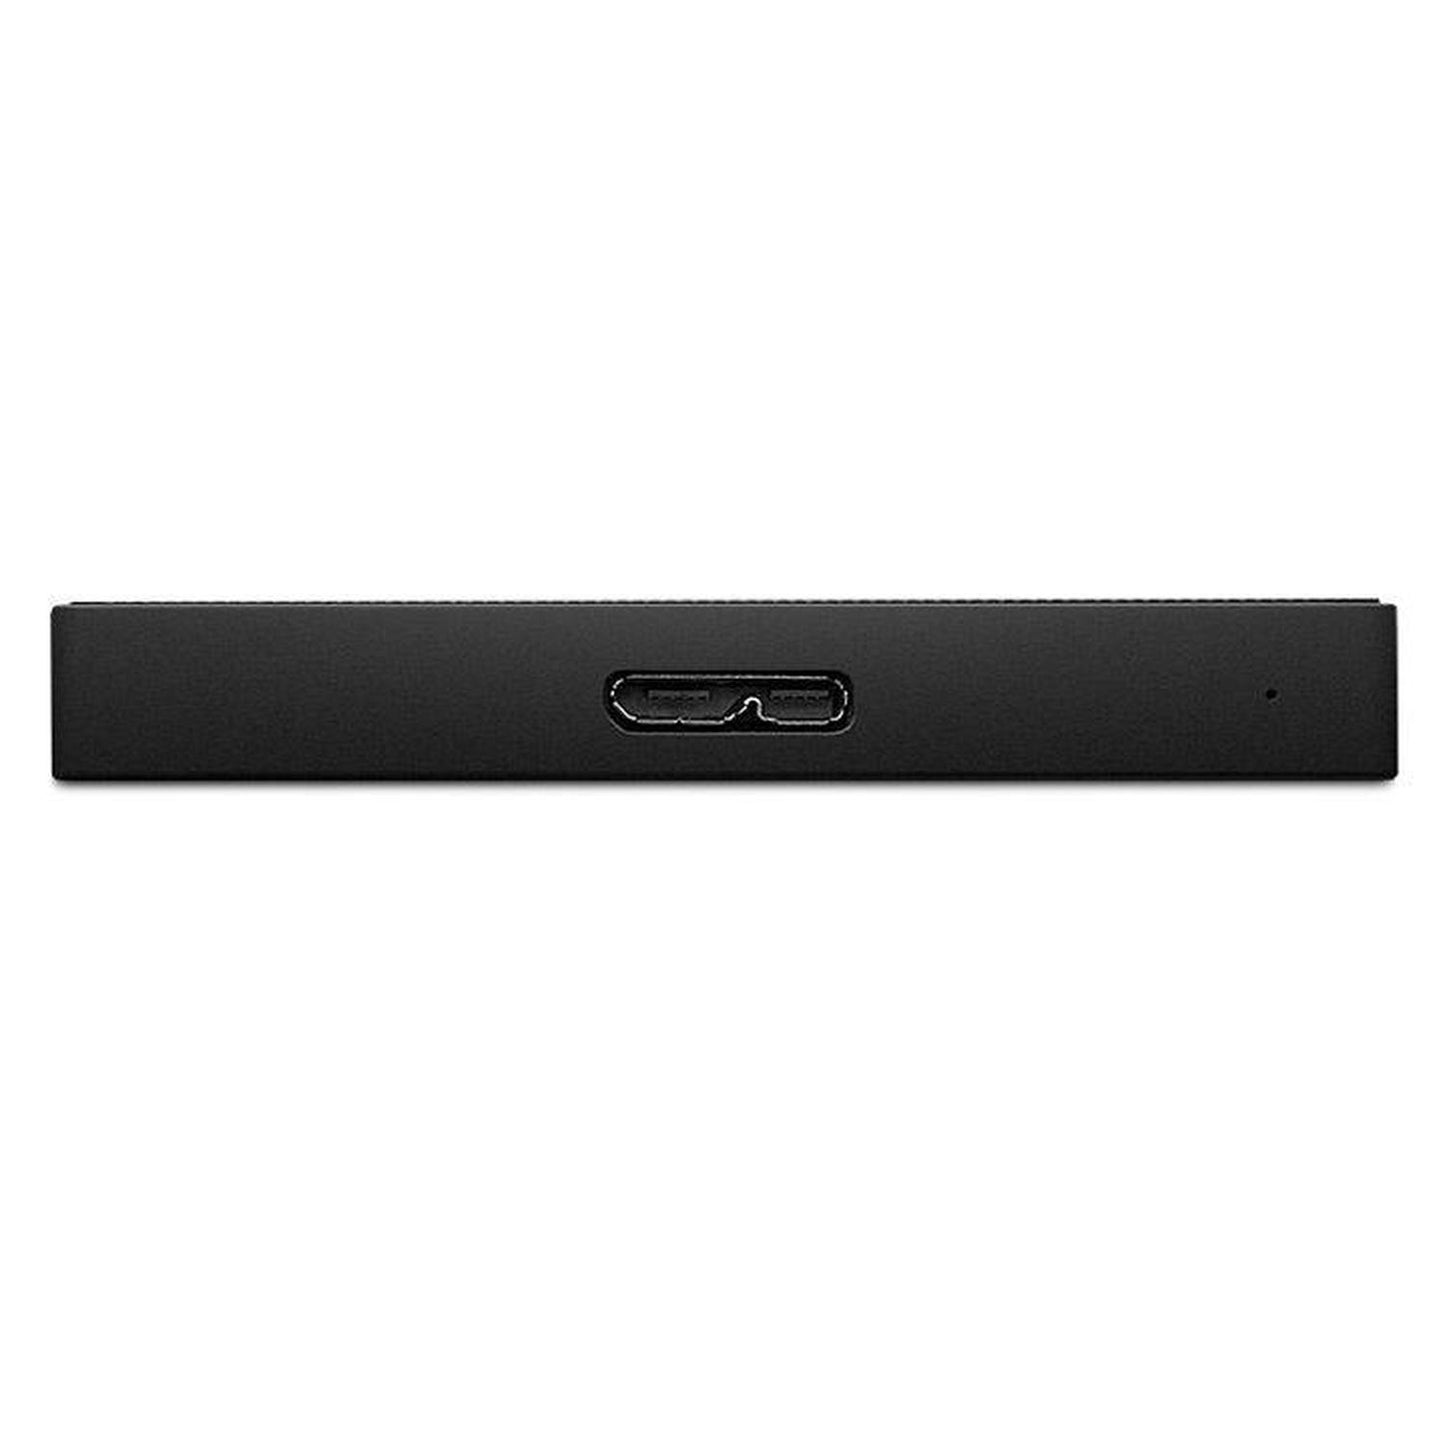 SSD Externo Seagate Expansion, 500GB, USB, Negro - para Mac/PC